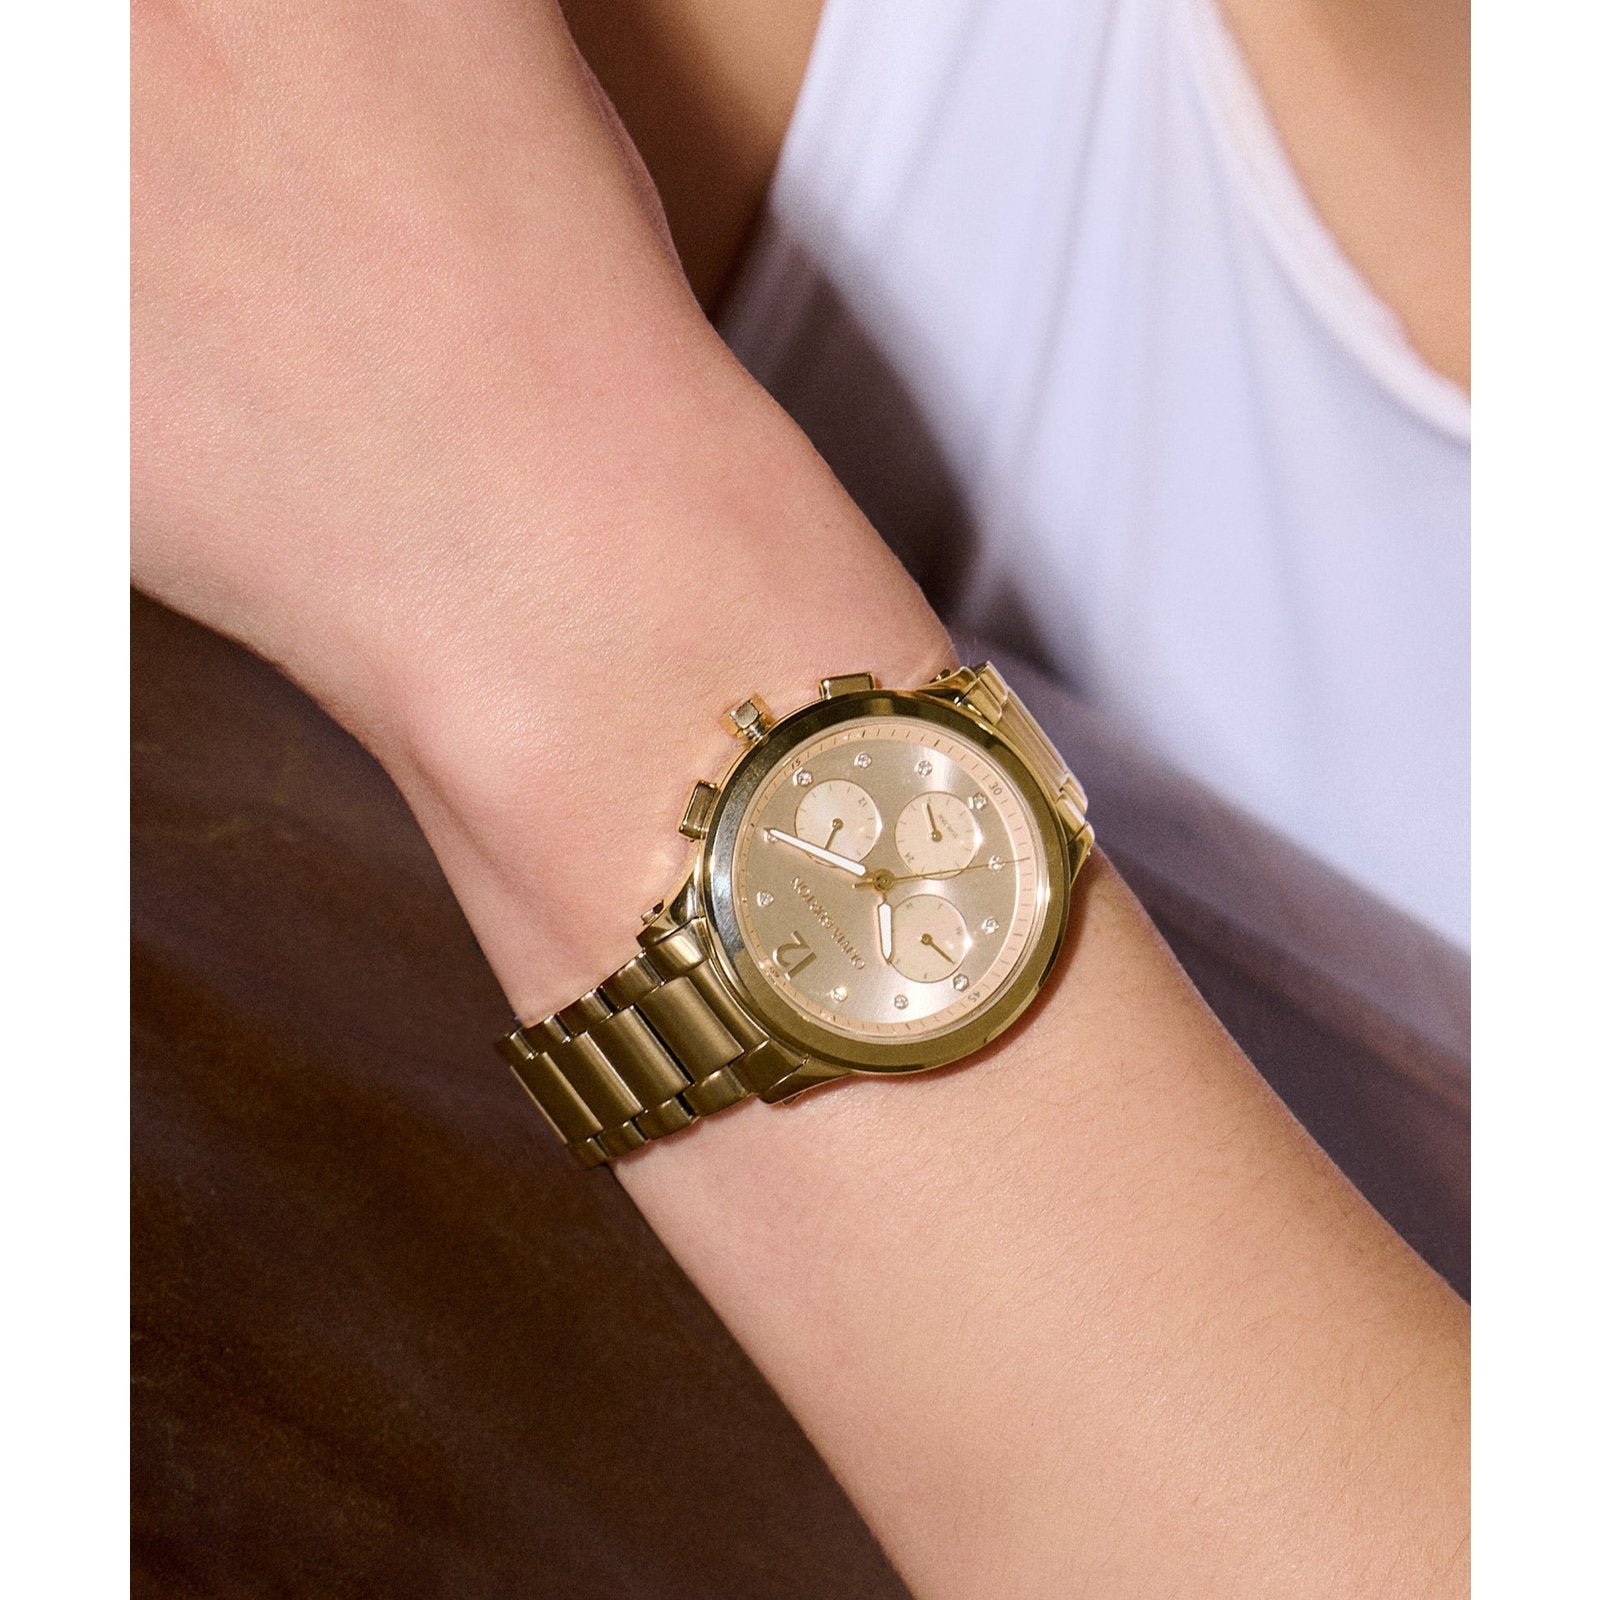 Multi-Function Champagne & Gold Bracelet Watch 24000054 Olivia Burton